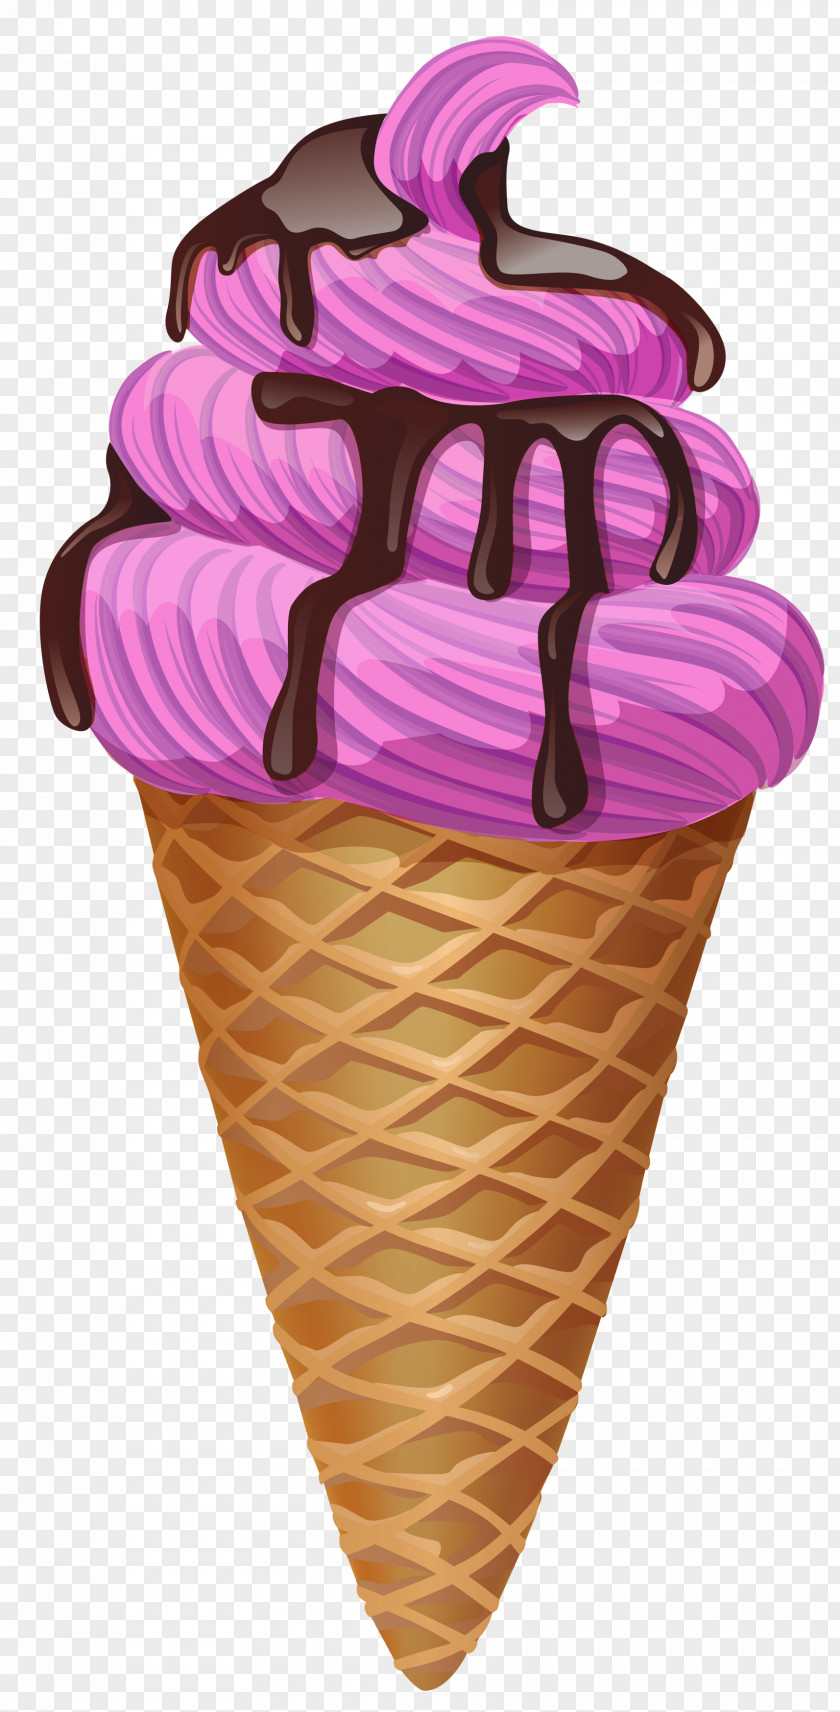 Treats Ice Cream Cones Chocolate Waffle PNG